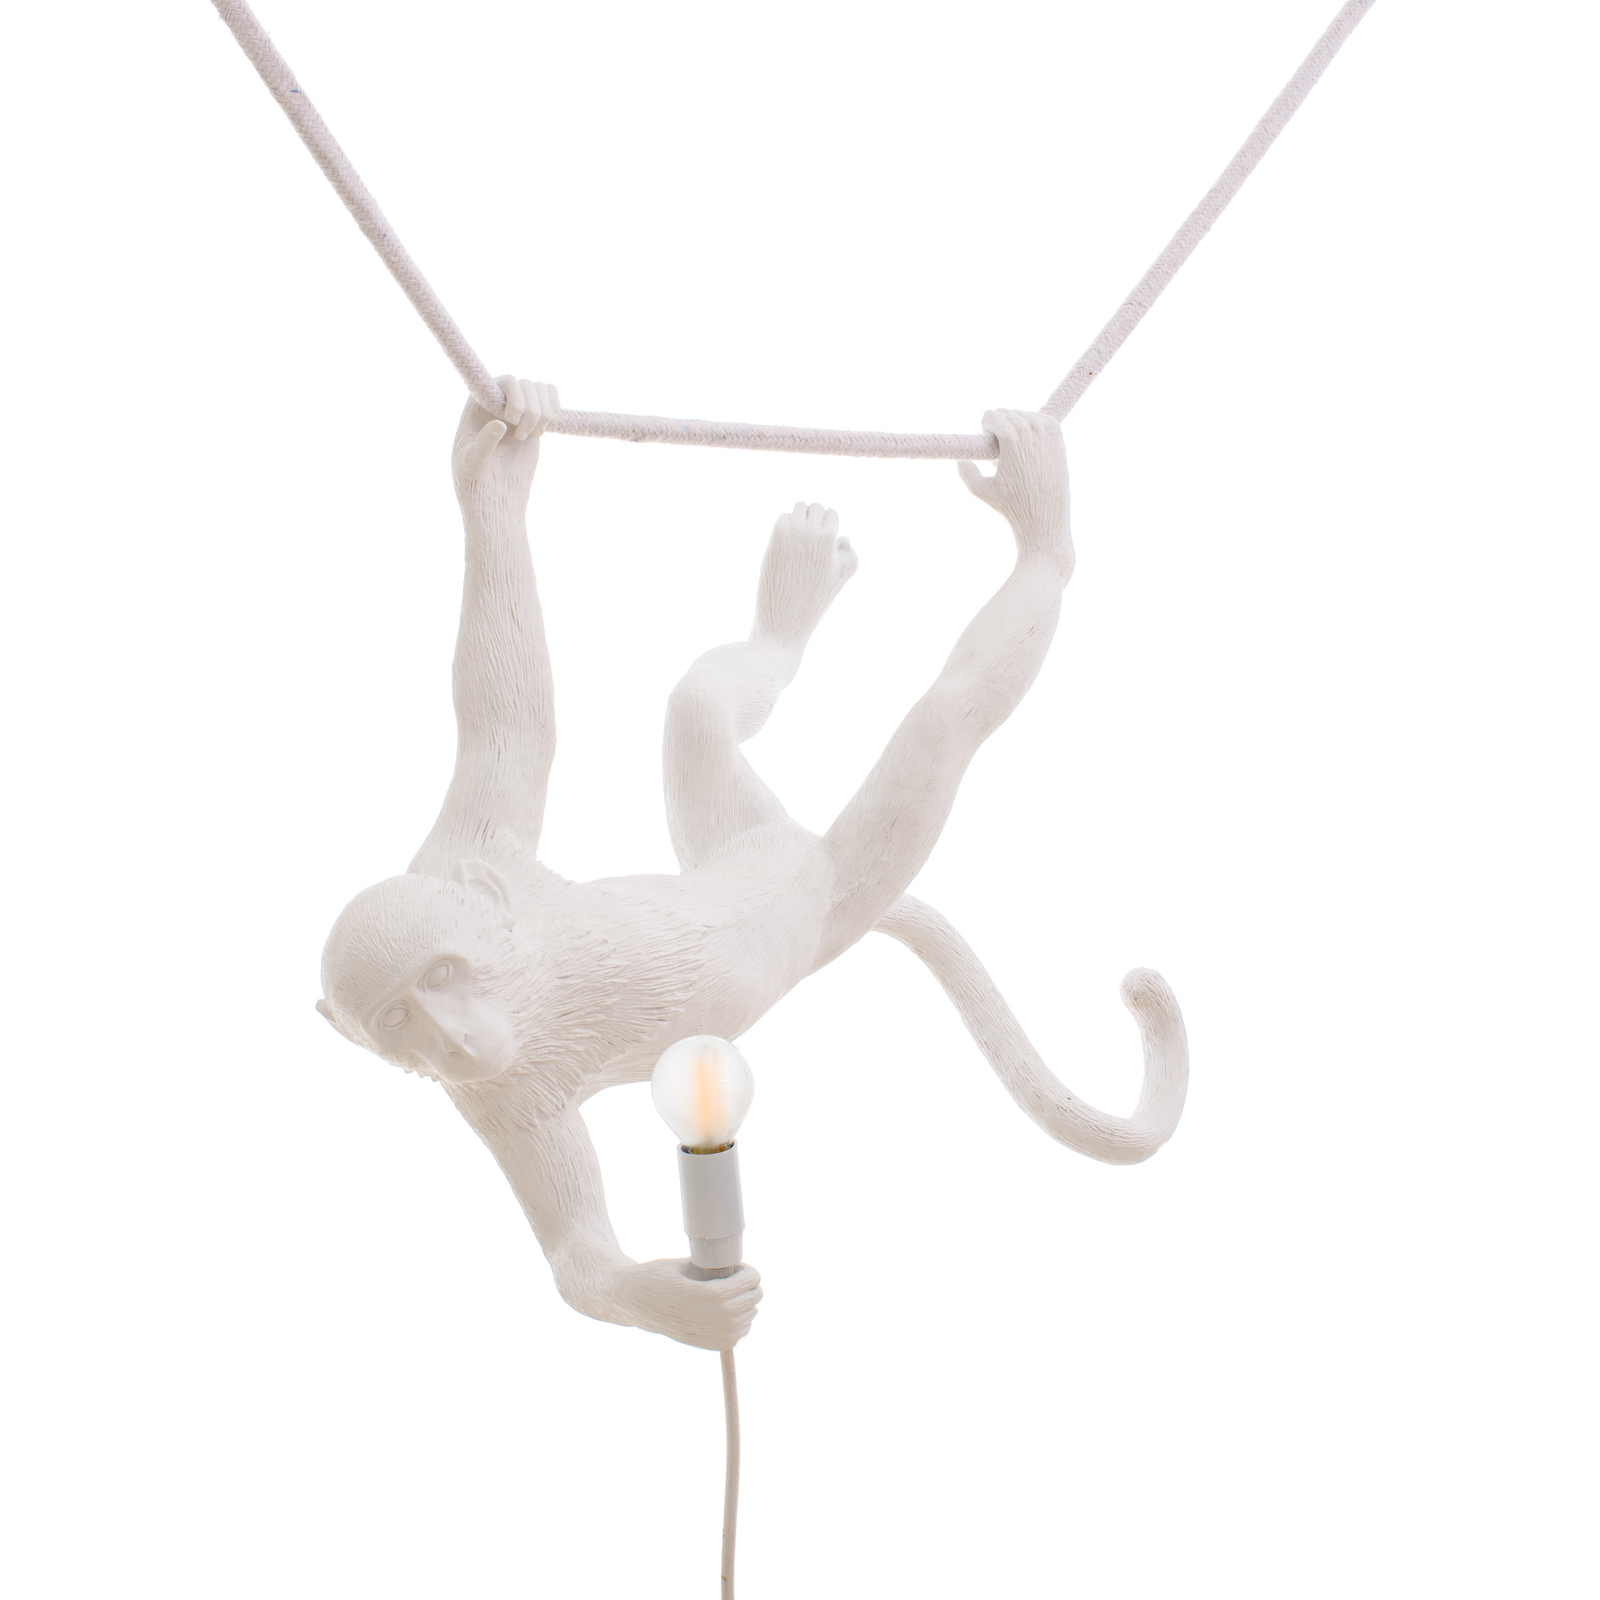 LED decoratie-hanglamp Monkey Lamp wit slingerend